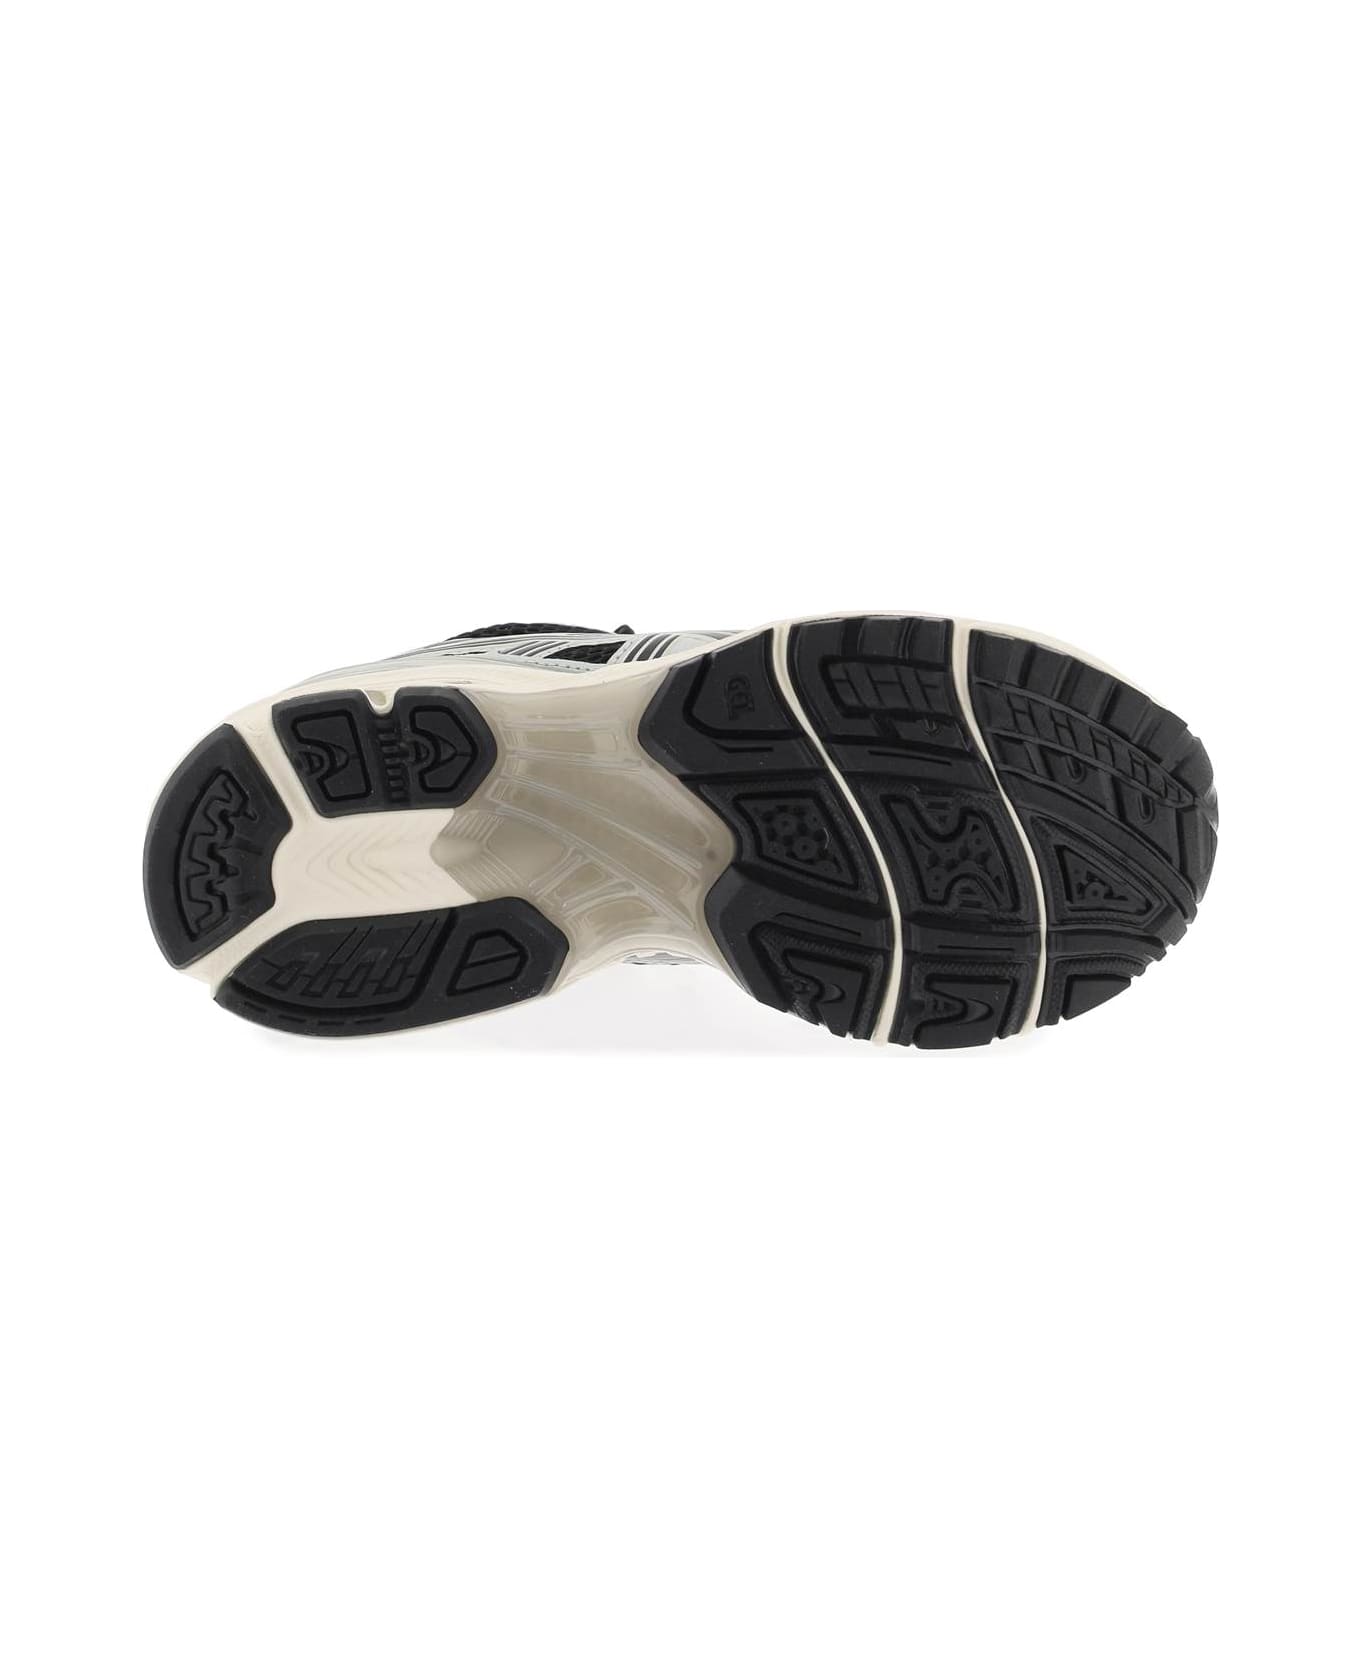 Asics Gel-kayano 14 Sneakers - BLACK SEAL GREY (Grey) スニーカー